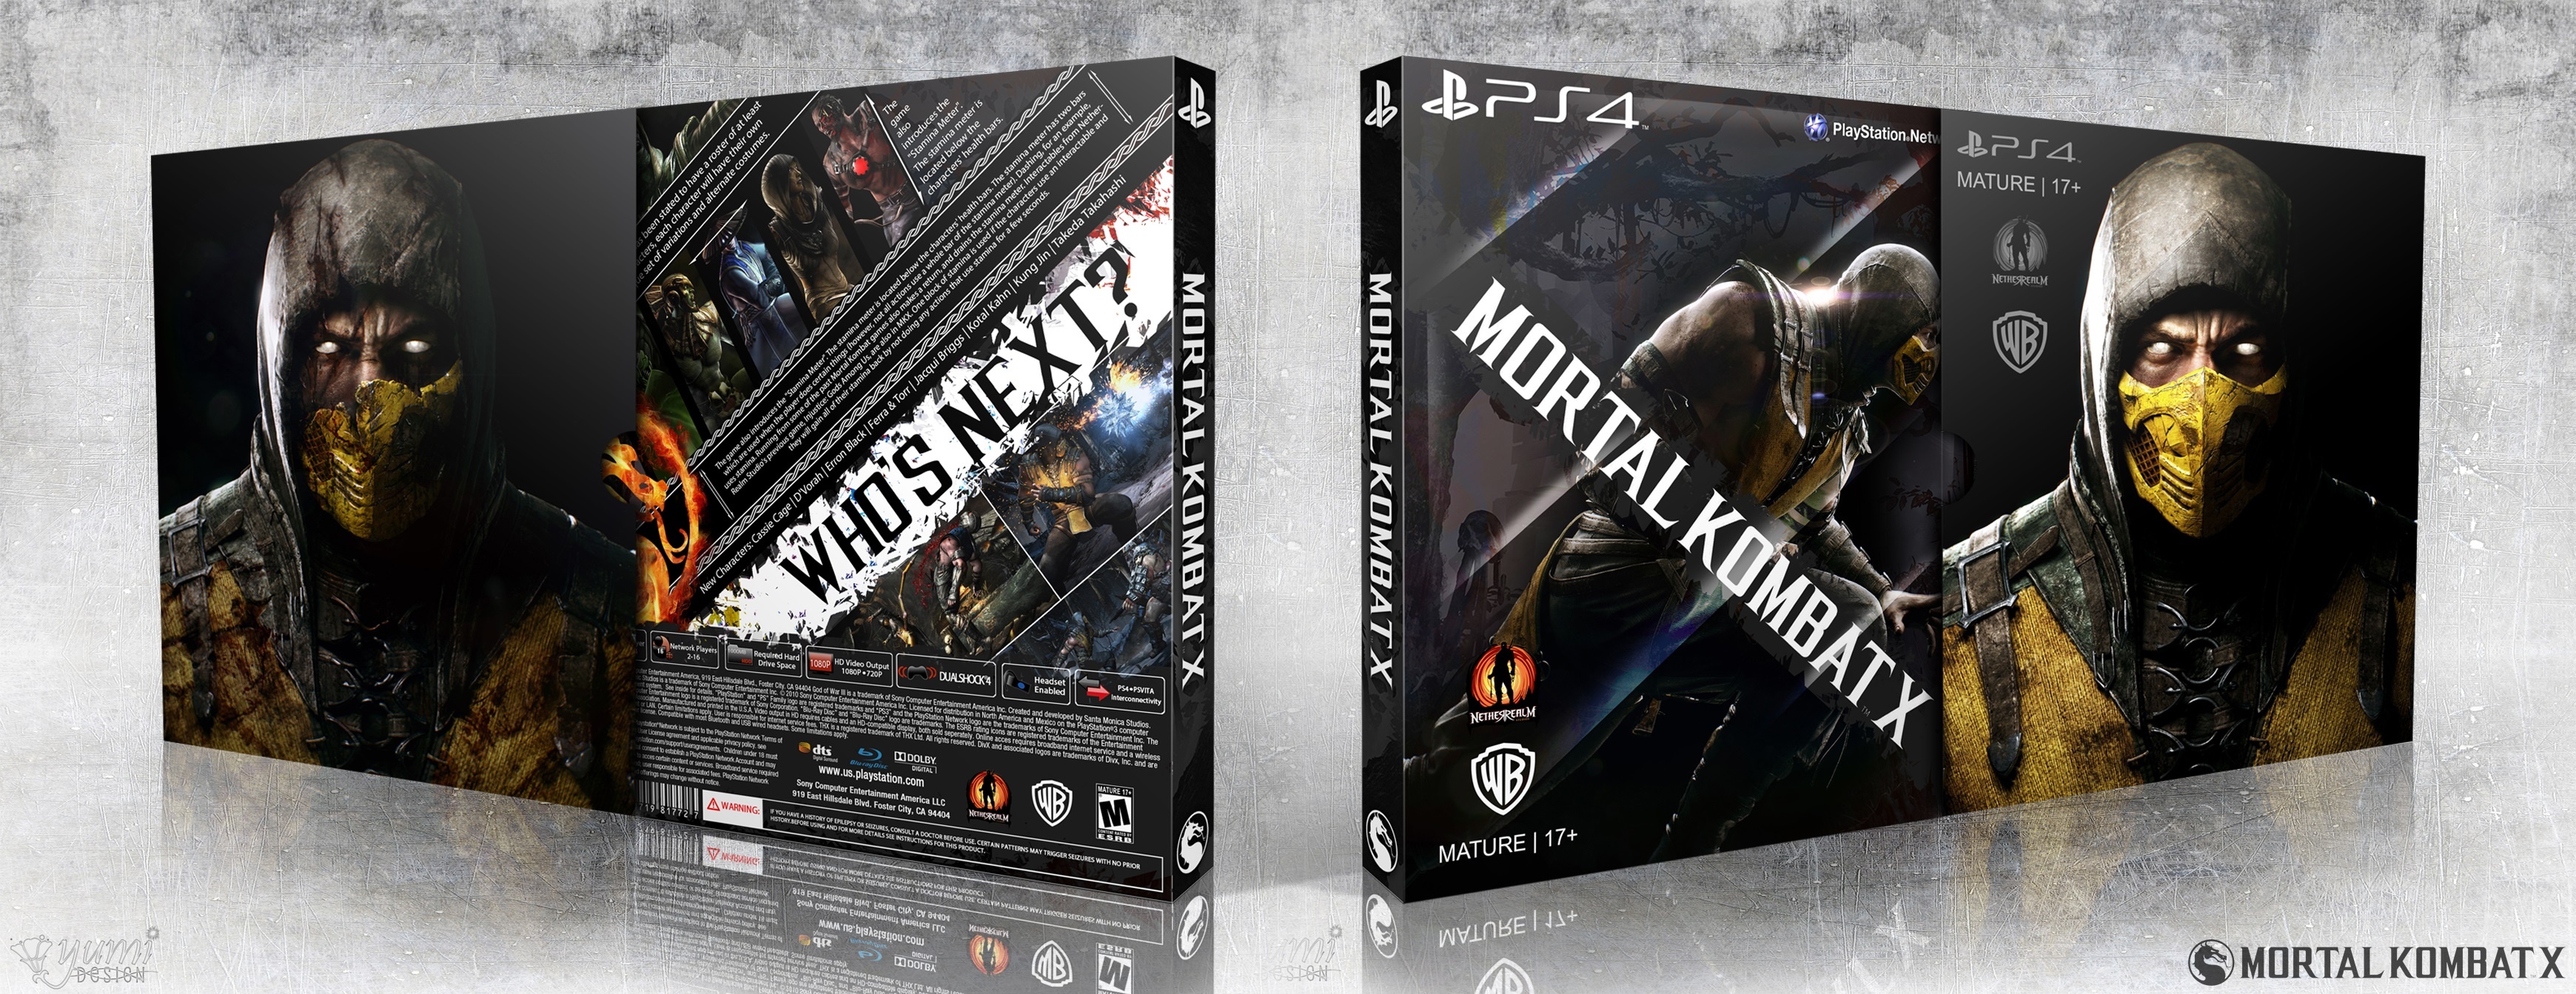 Mortal Kombat X box cover